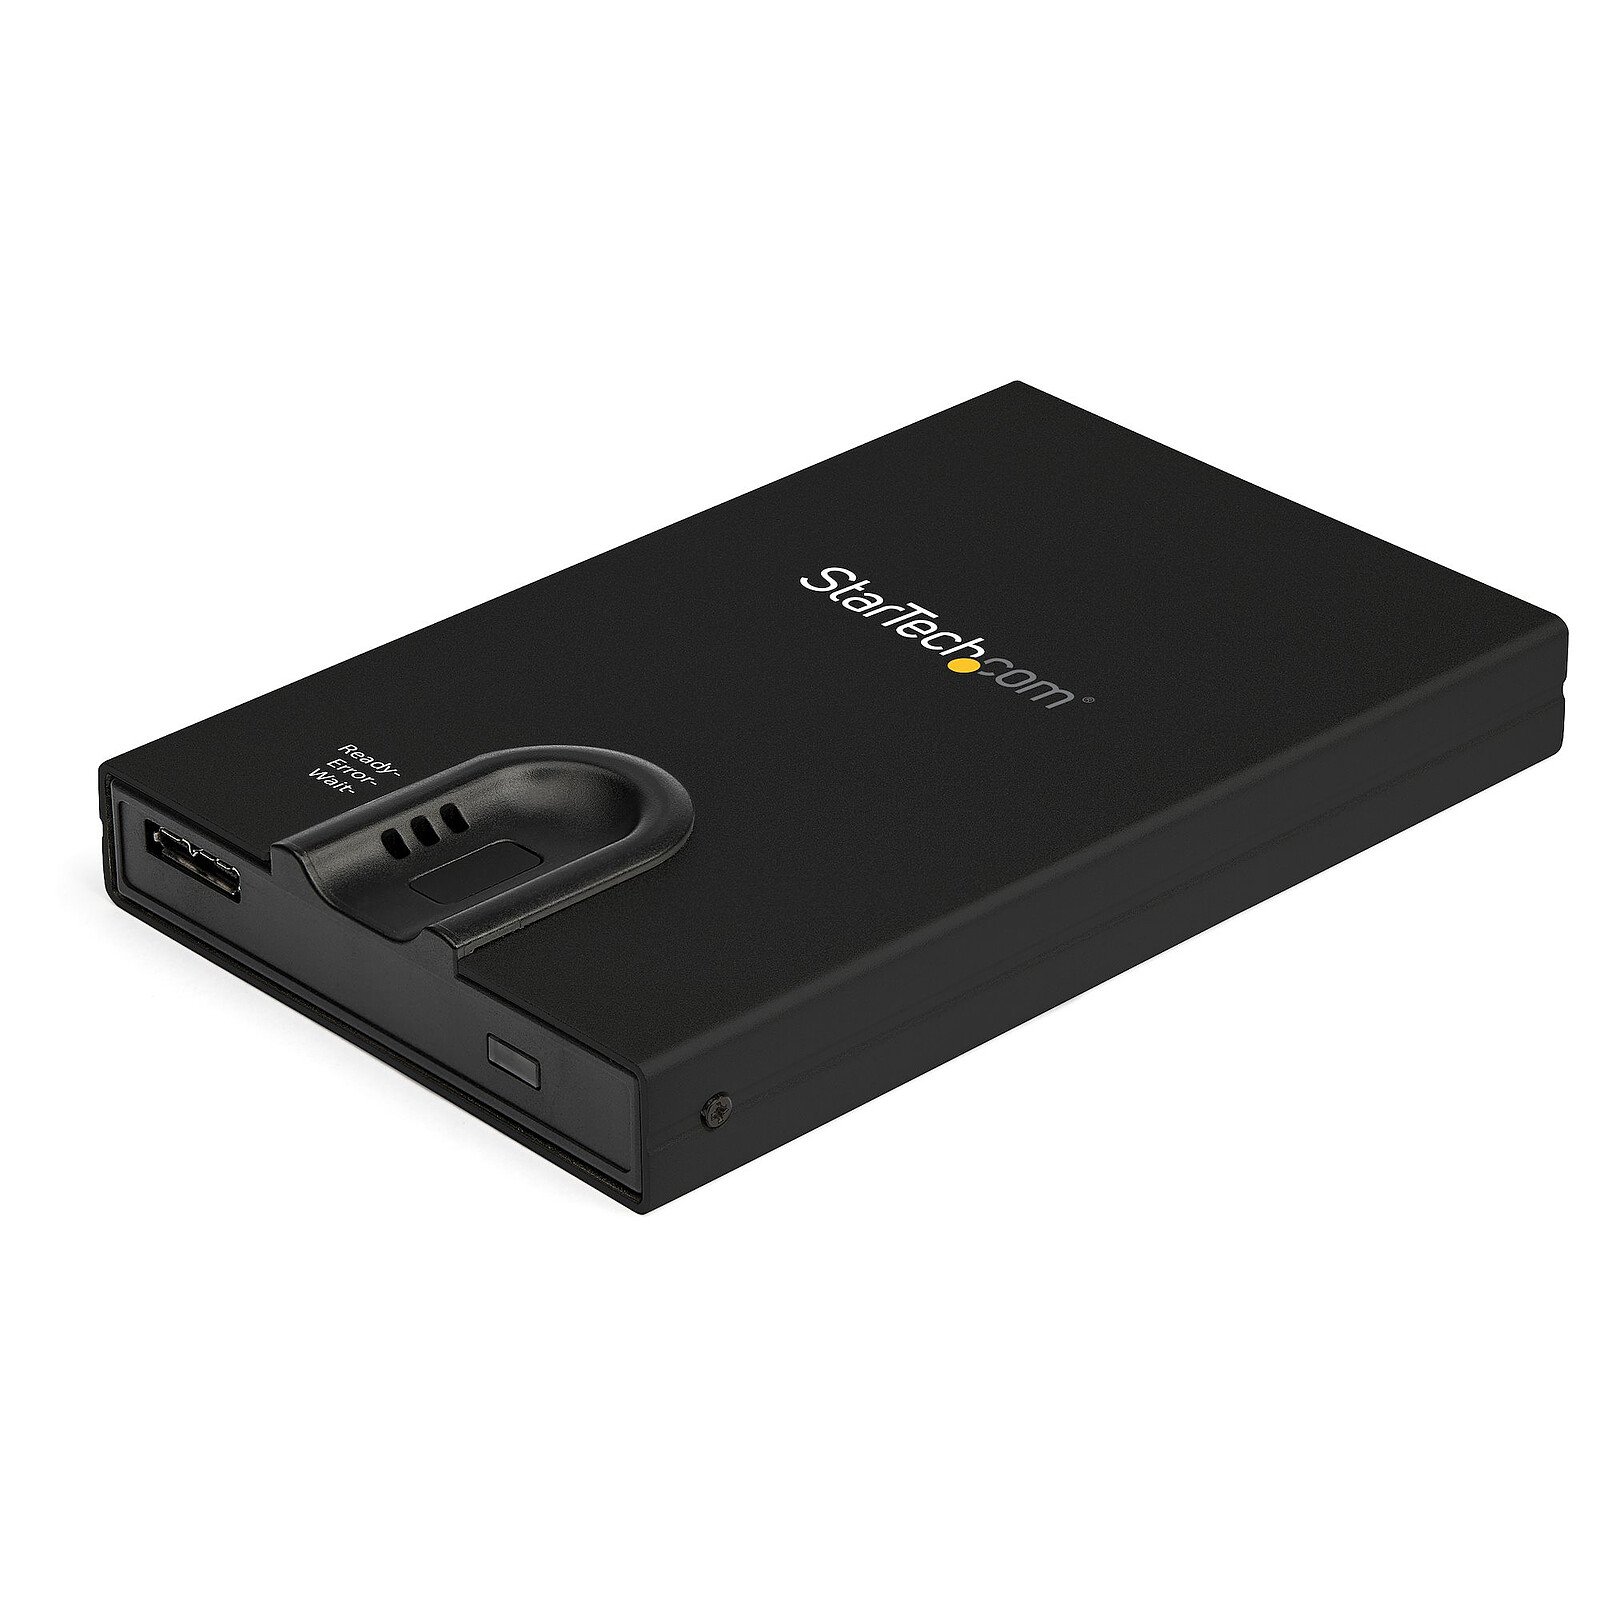 ICY BOX IB-525-U3 - Boîtier disque dur - Garantie 3 ans LDLC